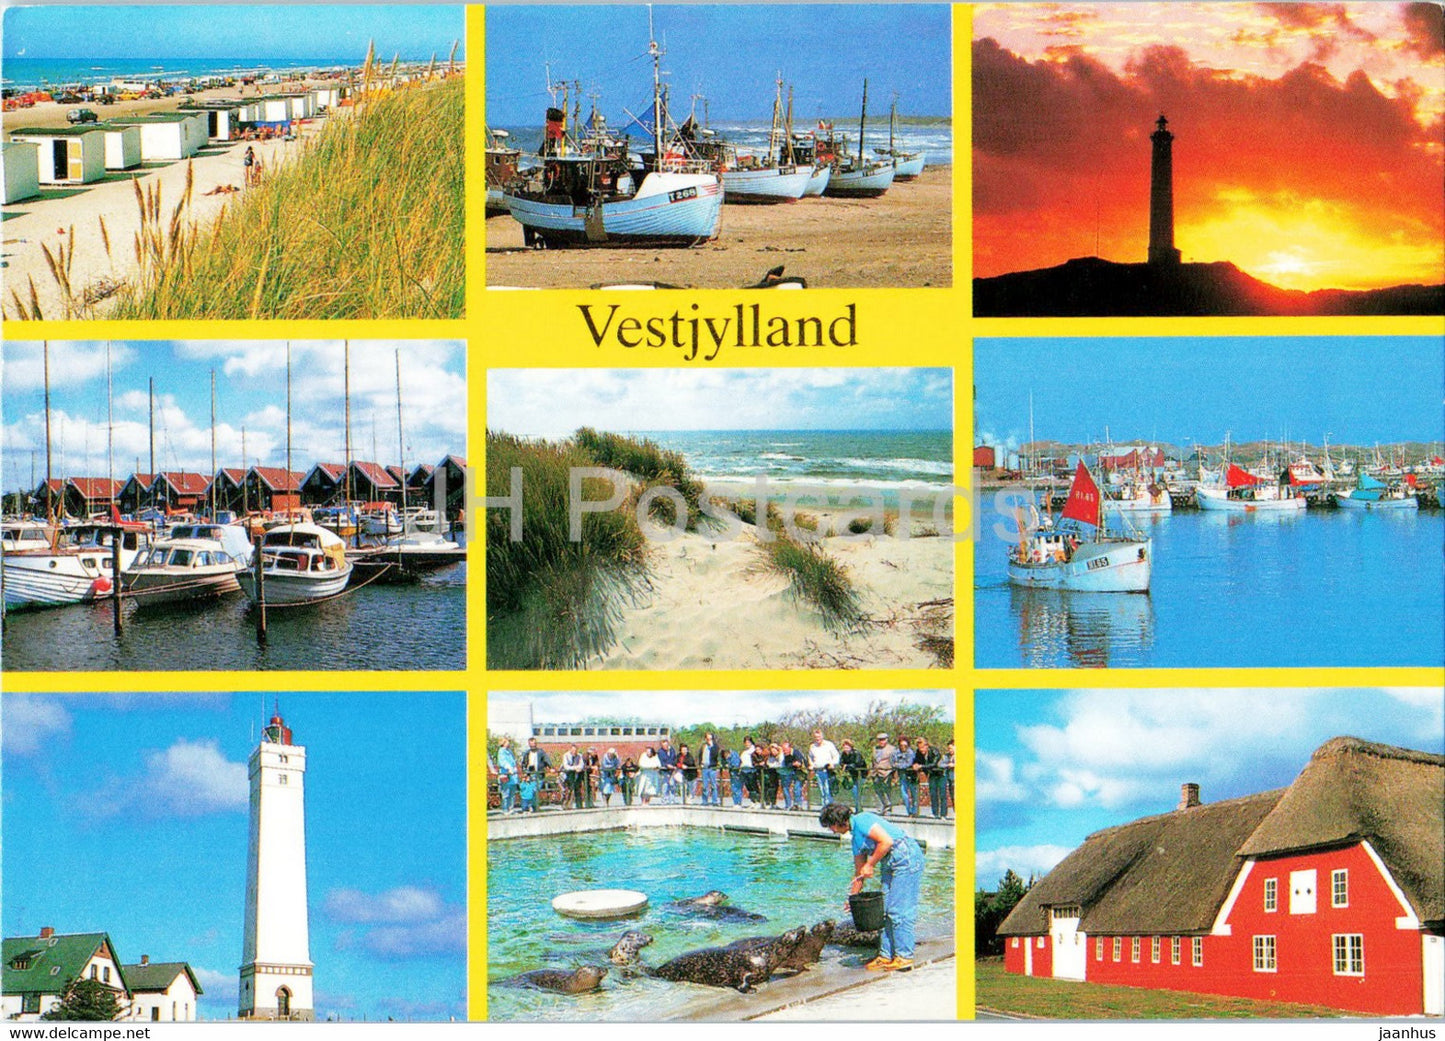 Vestjylland - lighthouse - boat - multiview - Denmark - unused - JH Postcards